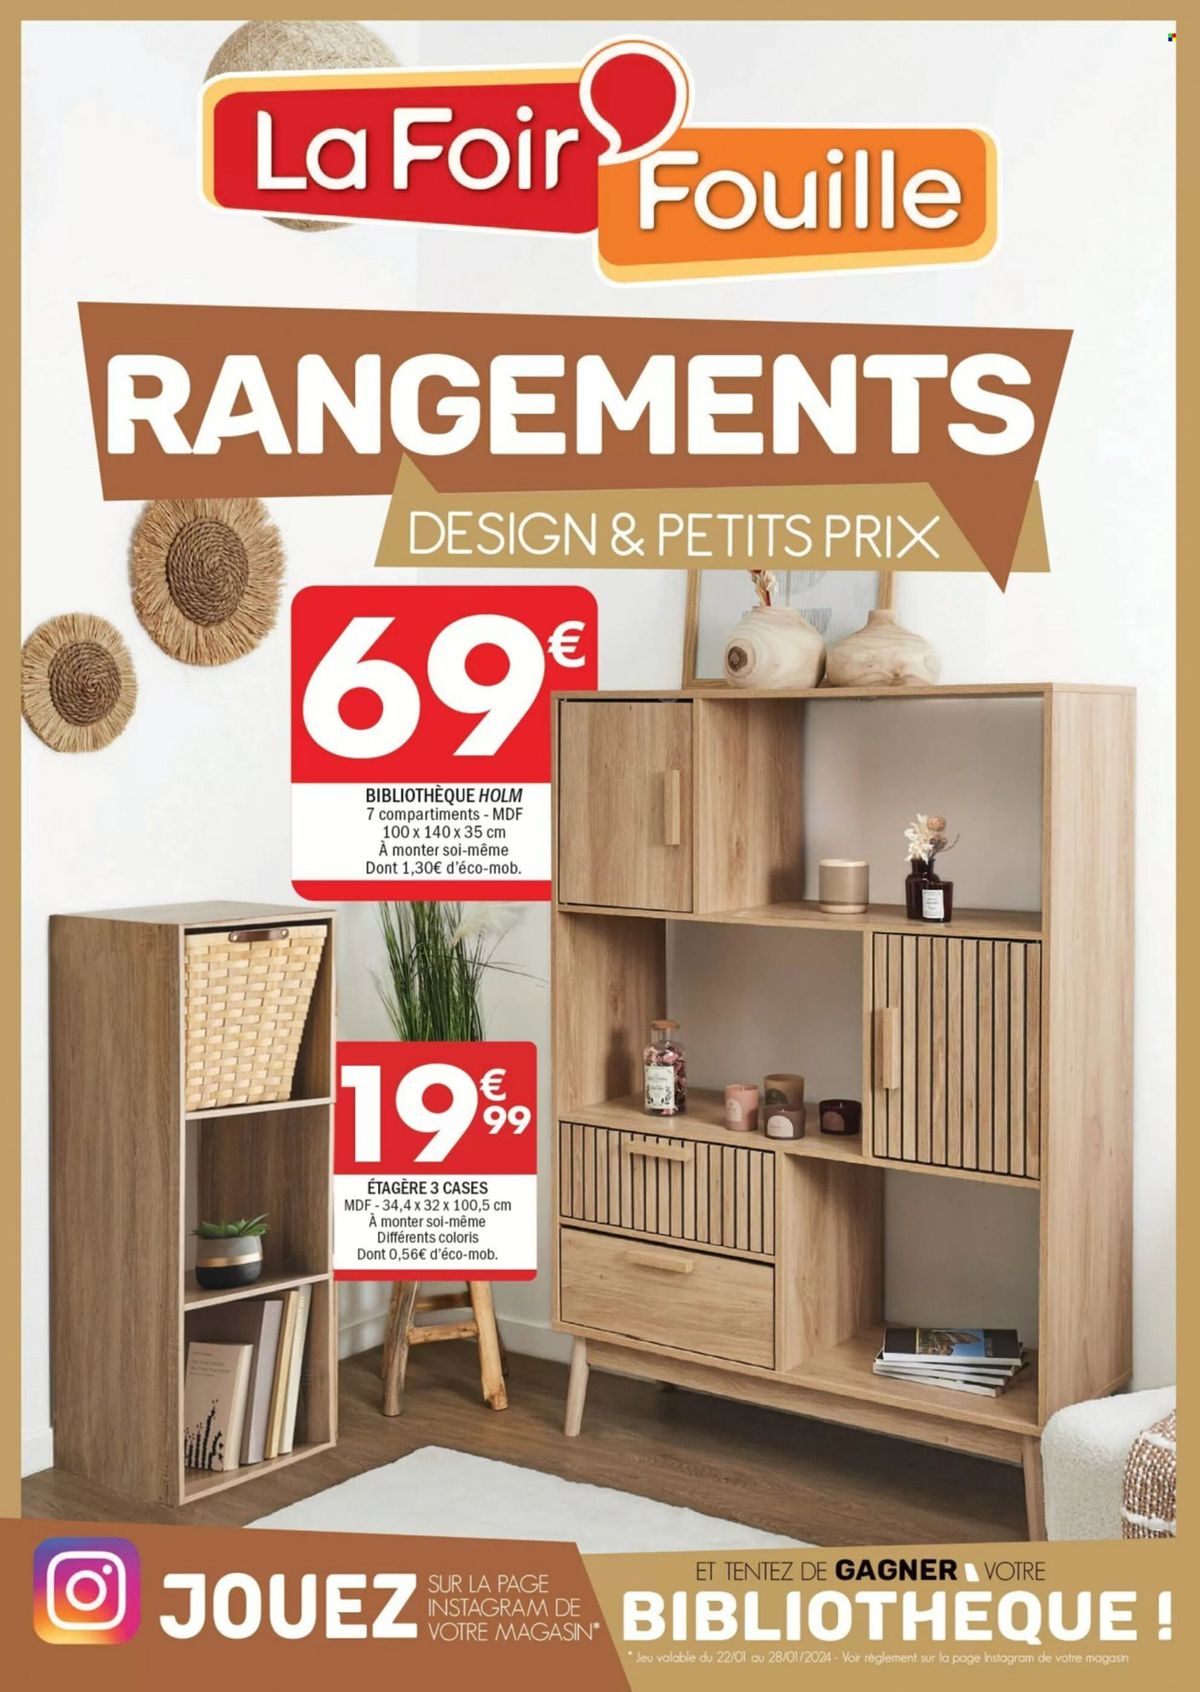 Catalogue Rangements design & petits prix, page 00001